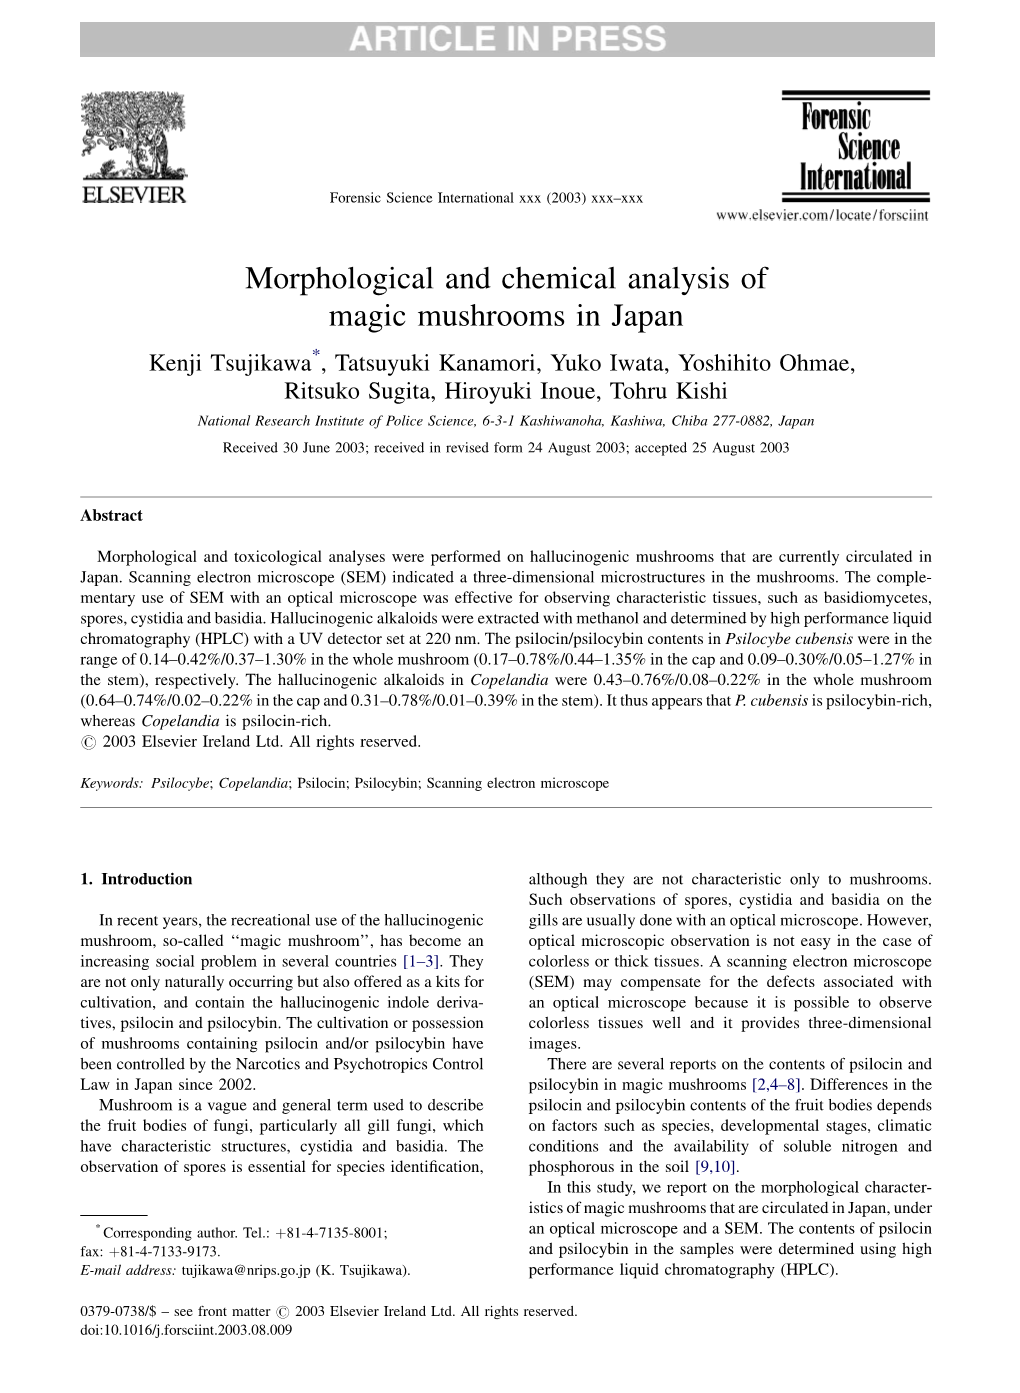 Morphological and Chemical Analysis of Magic Mushrooms in Japan